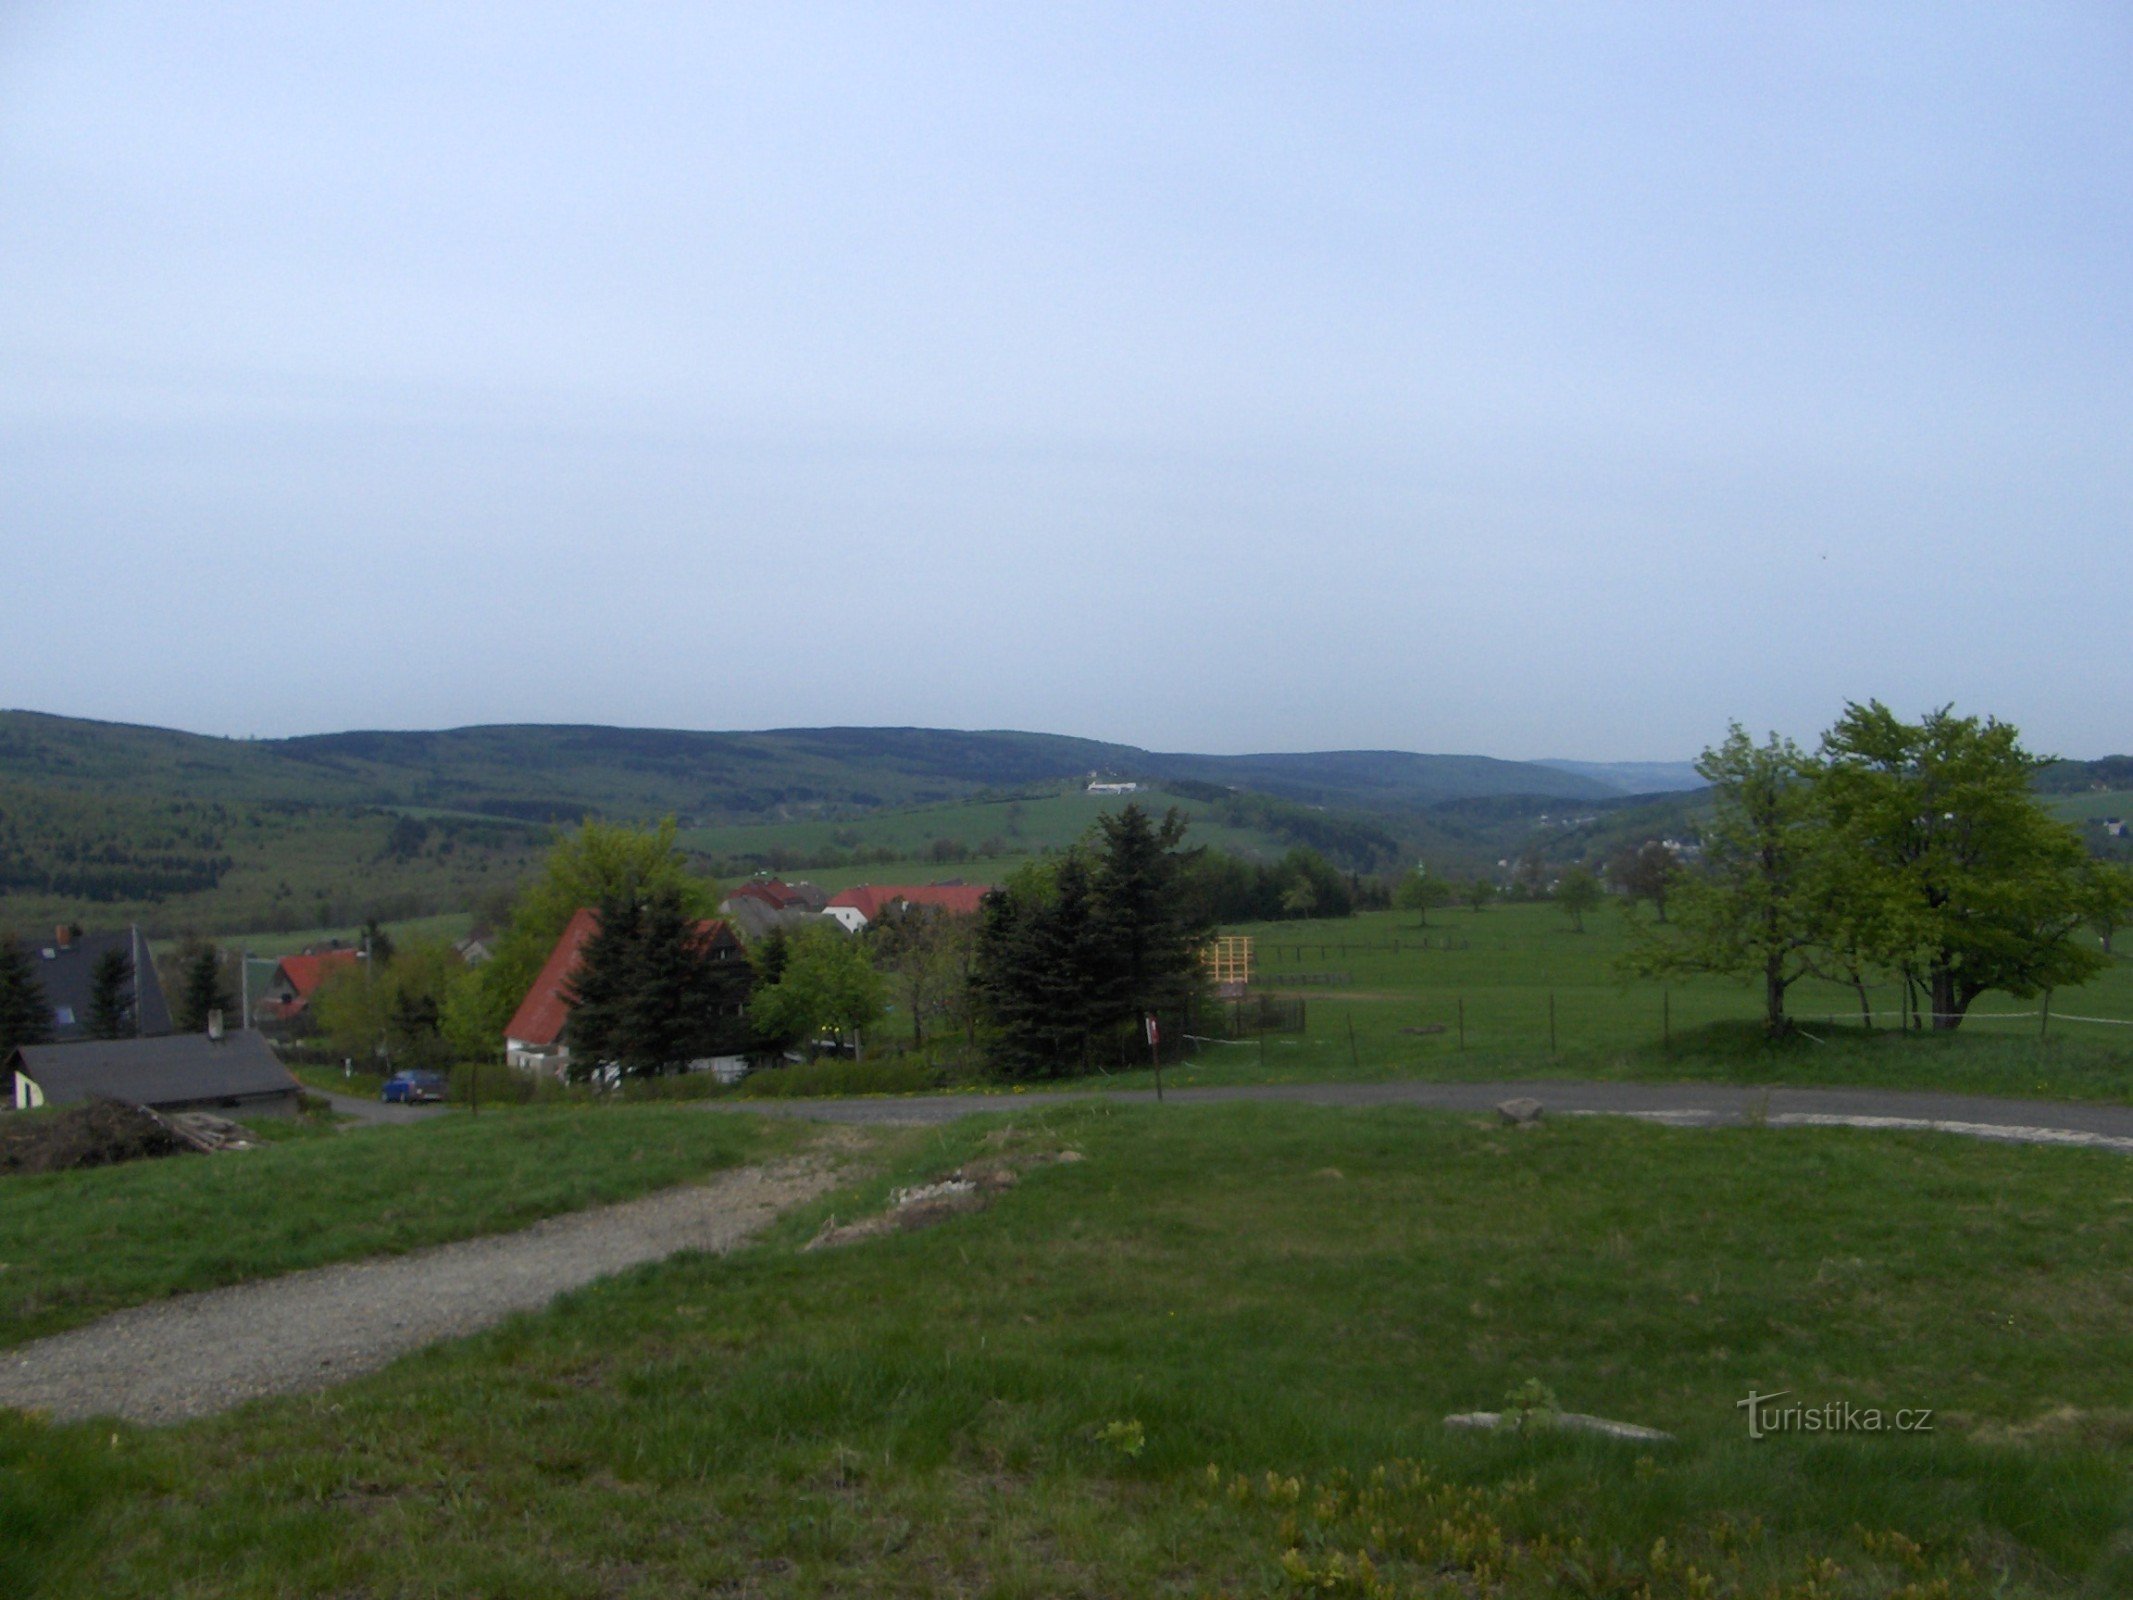 View towards Mount St. Kateřiny and the ridge of Kamenné vrch